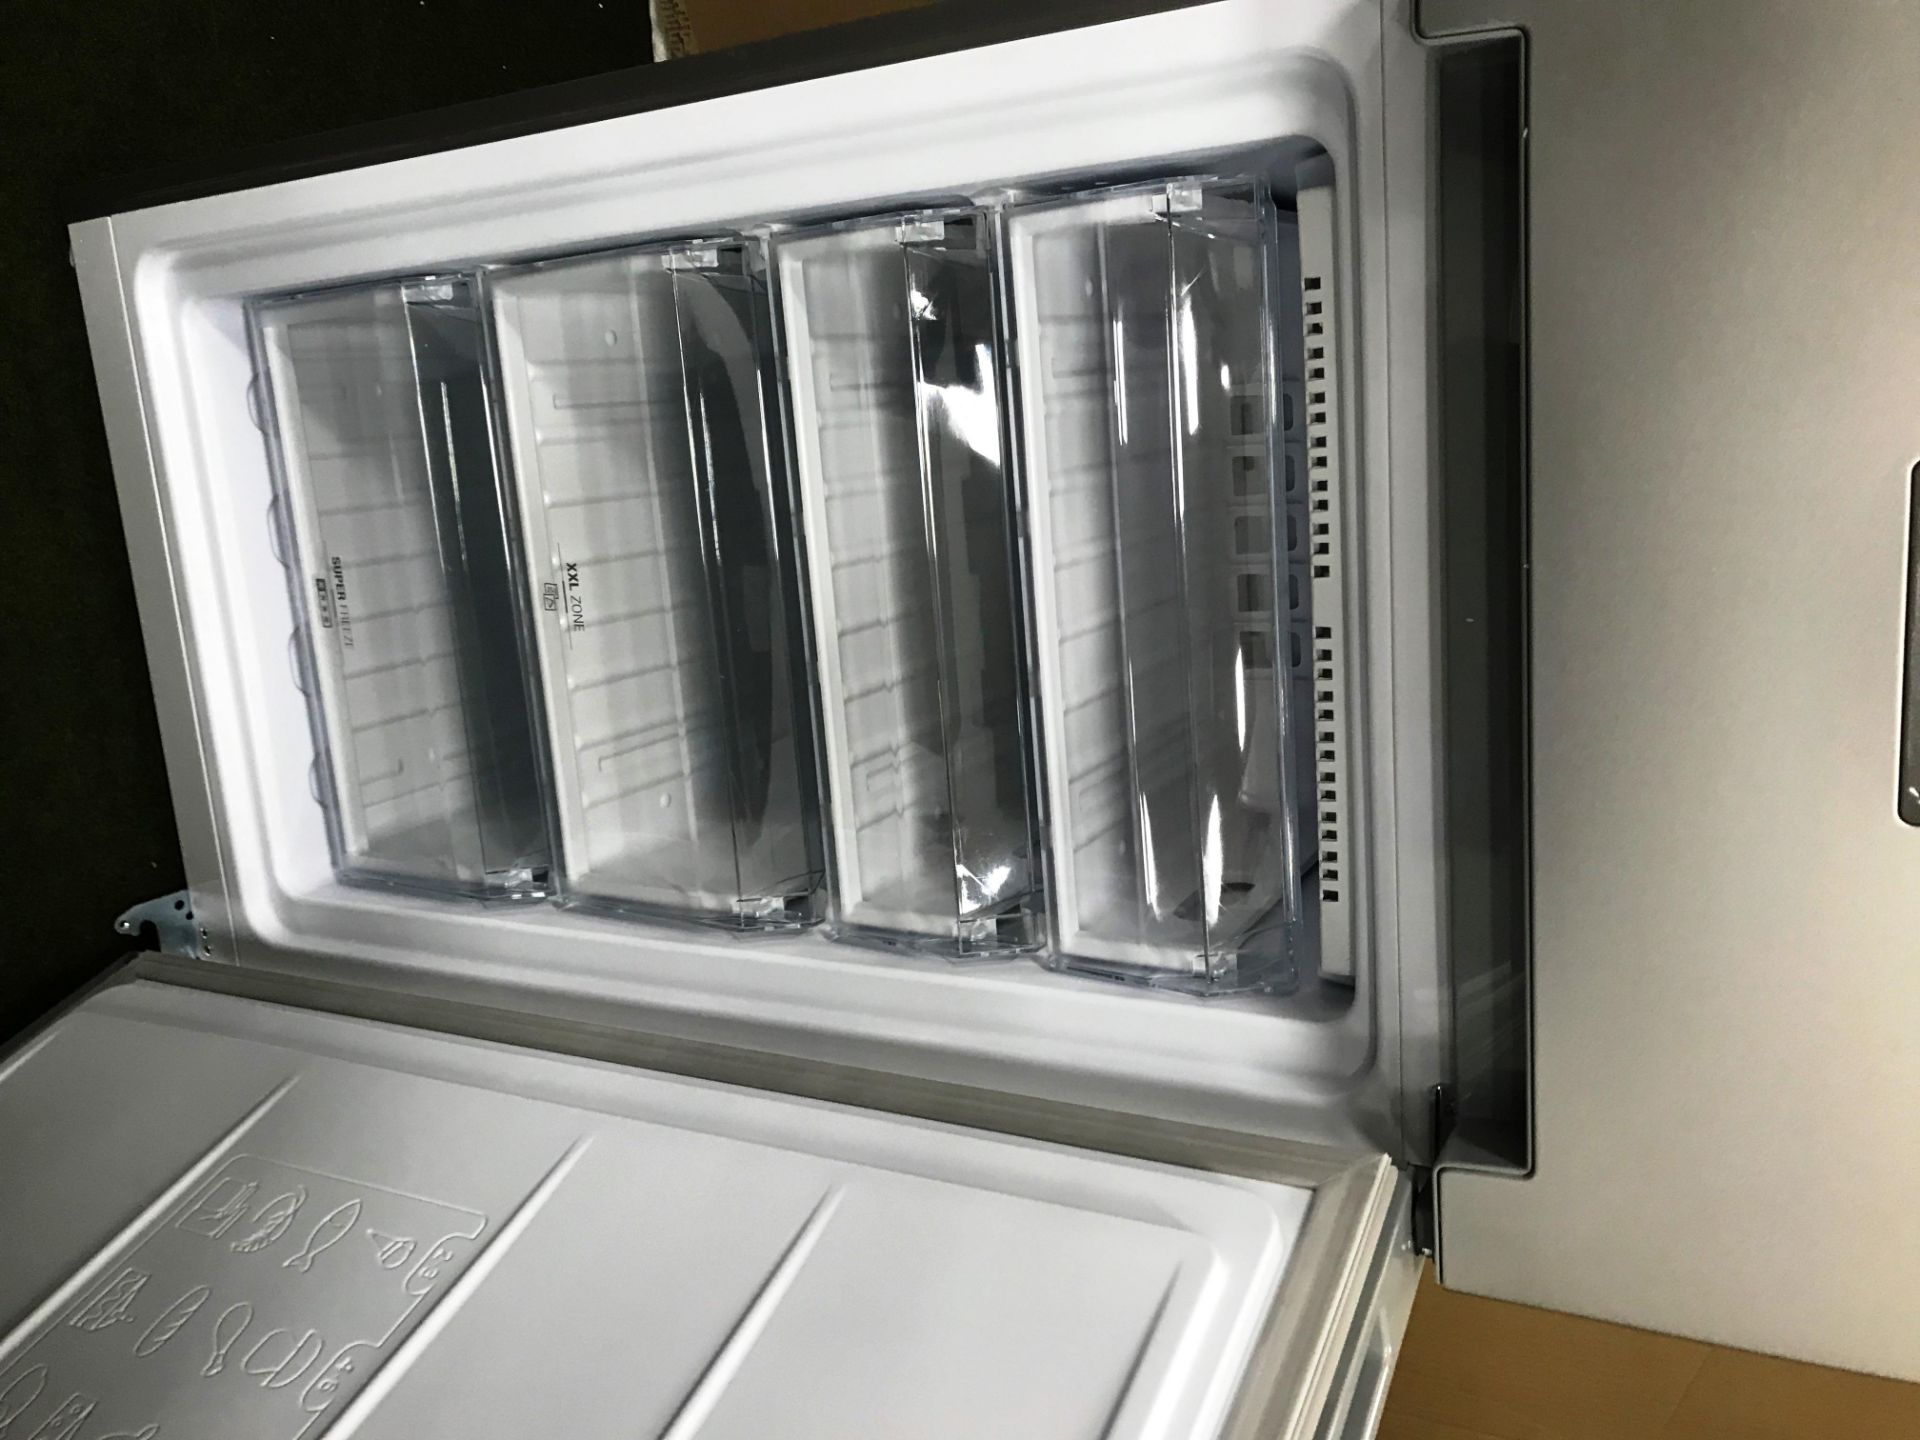 Hotpoint Frost Free Freestanding Fridge Freezer w/ Water Dispenser - Graphite - RRP £389 - Image 4 of 8